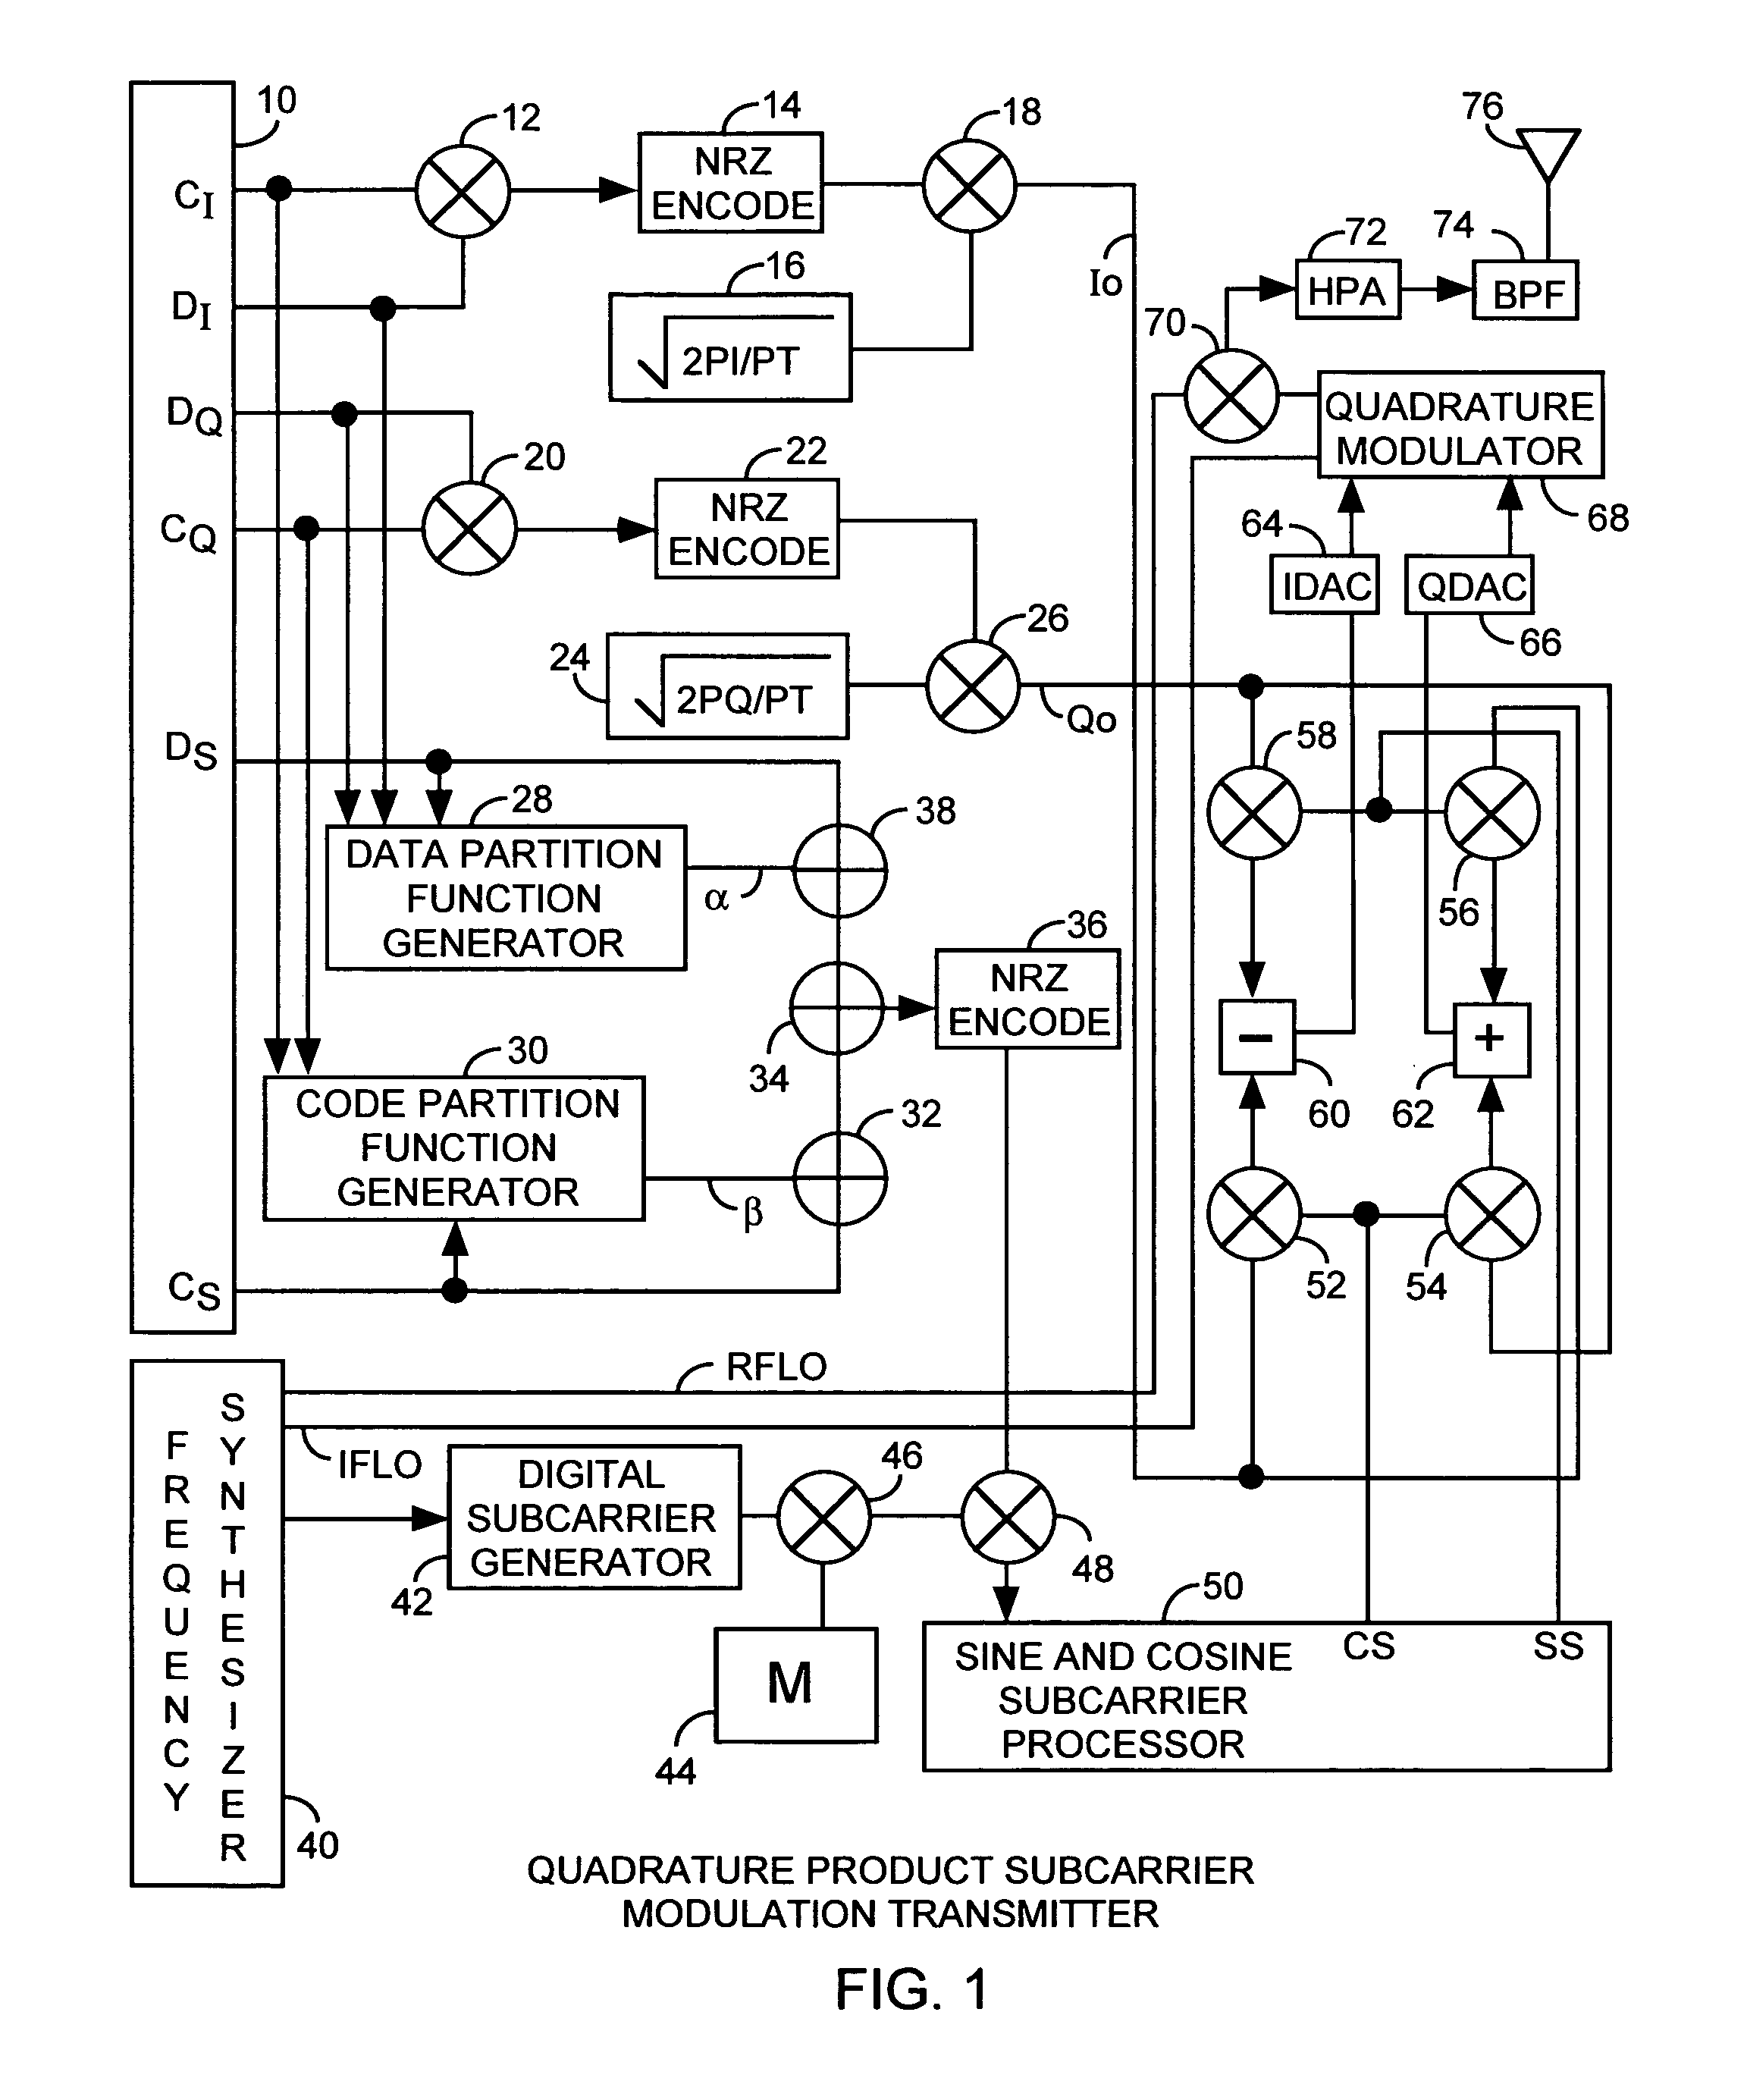 Quadrature product subcarrier modulation system